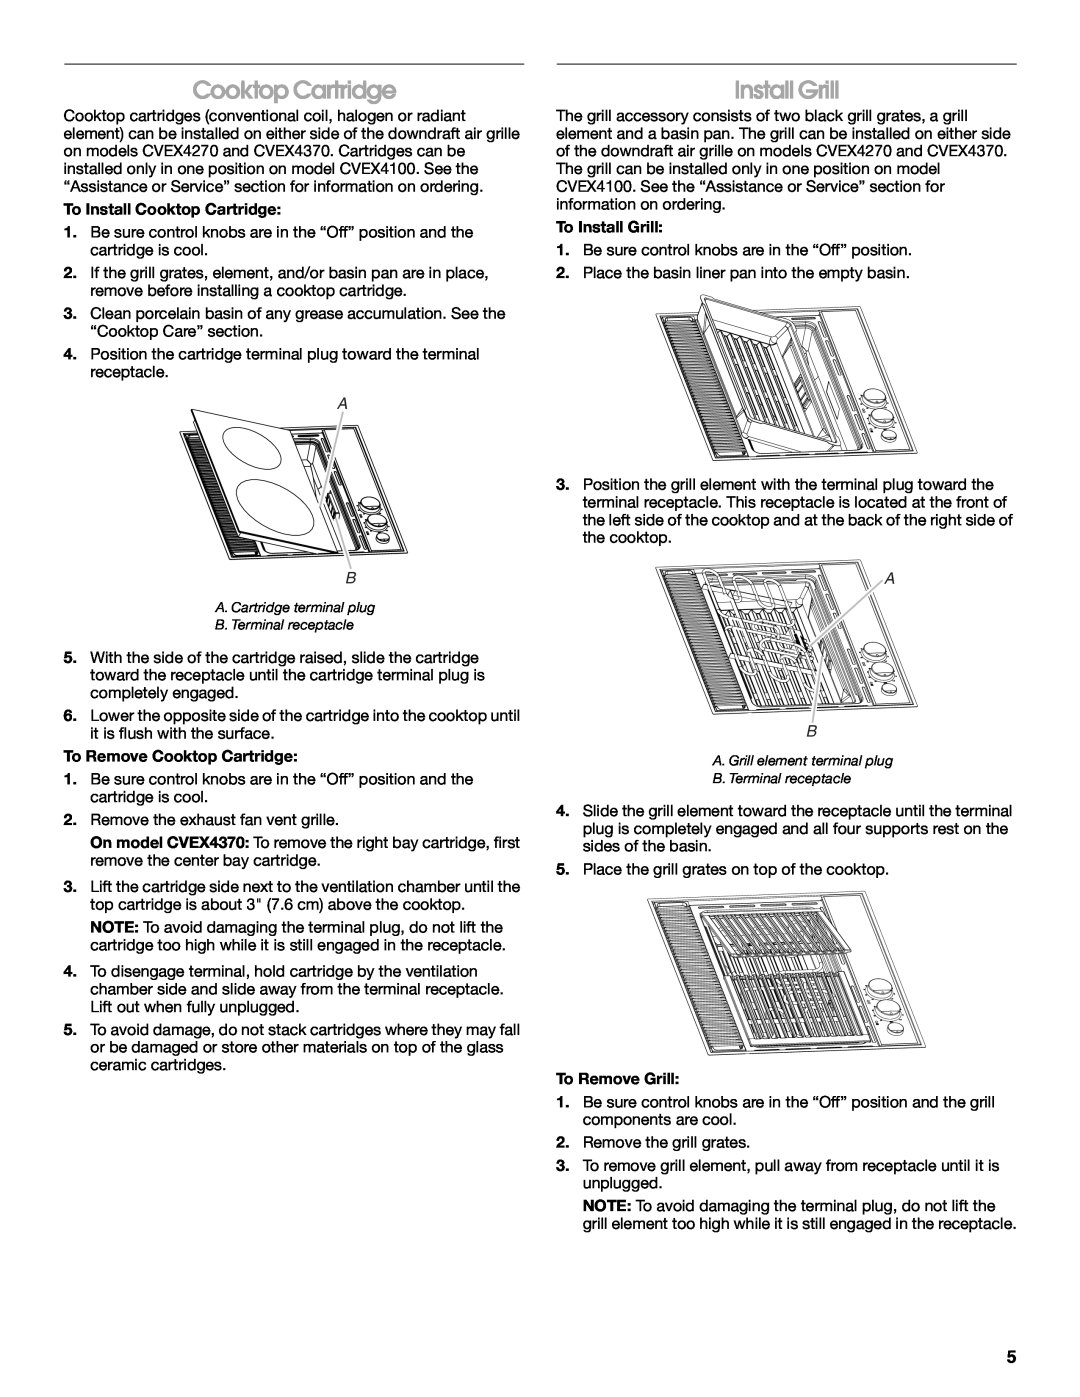 Jenn-Air 20 manual To Install Cooktop Cartridge, To Remove Cooktop Cartridge, To Install Grill, To Remove Grill 